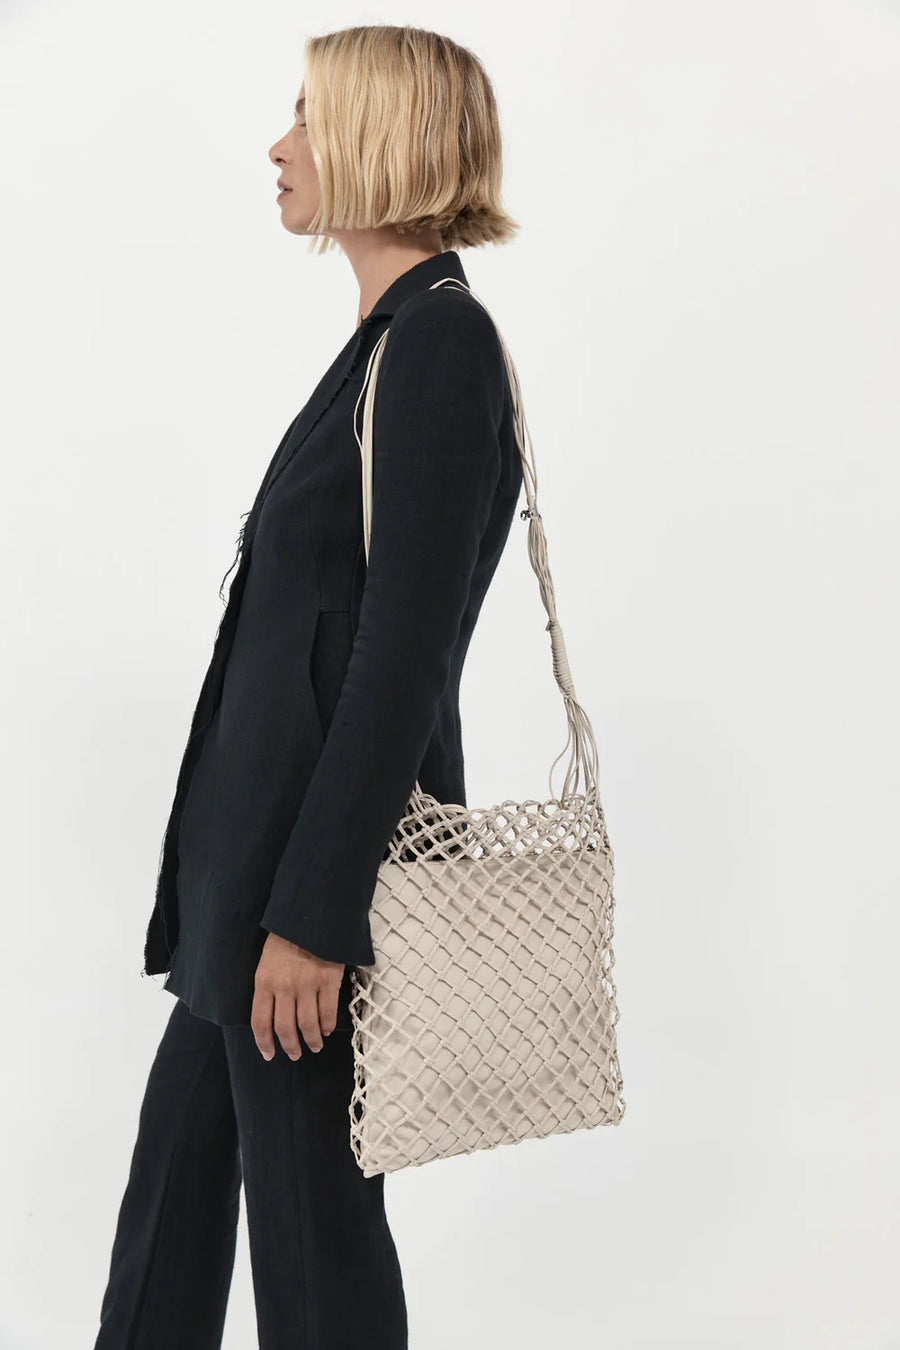 Woven Purse Macrame Crochet Bag Wooden Bead Beige Fringe Shoulder Strap  BOHO VTG | eBay